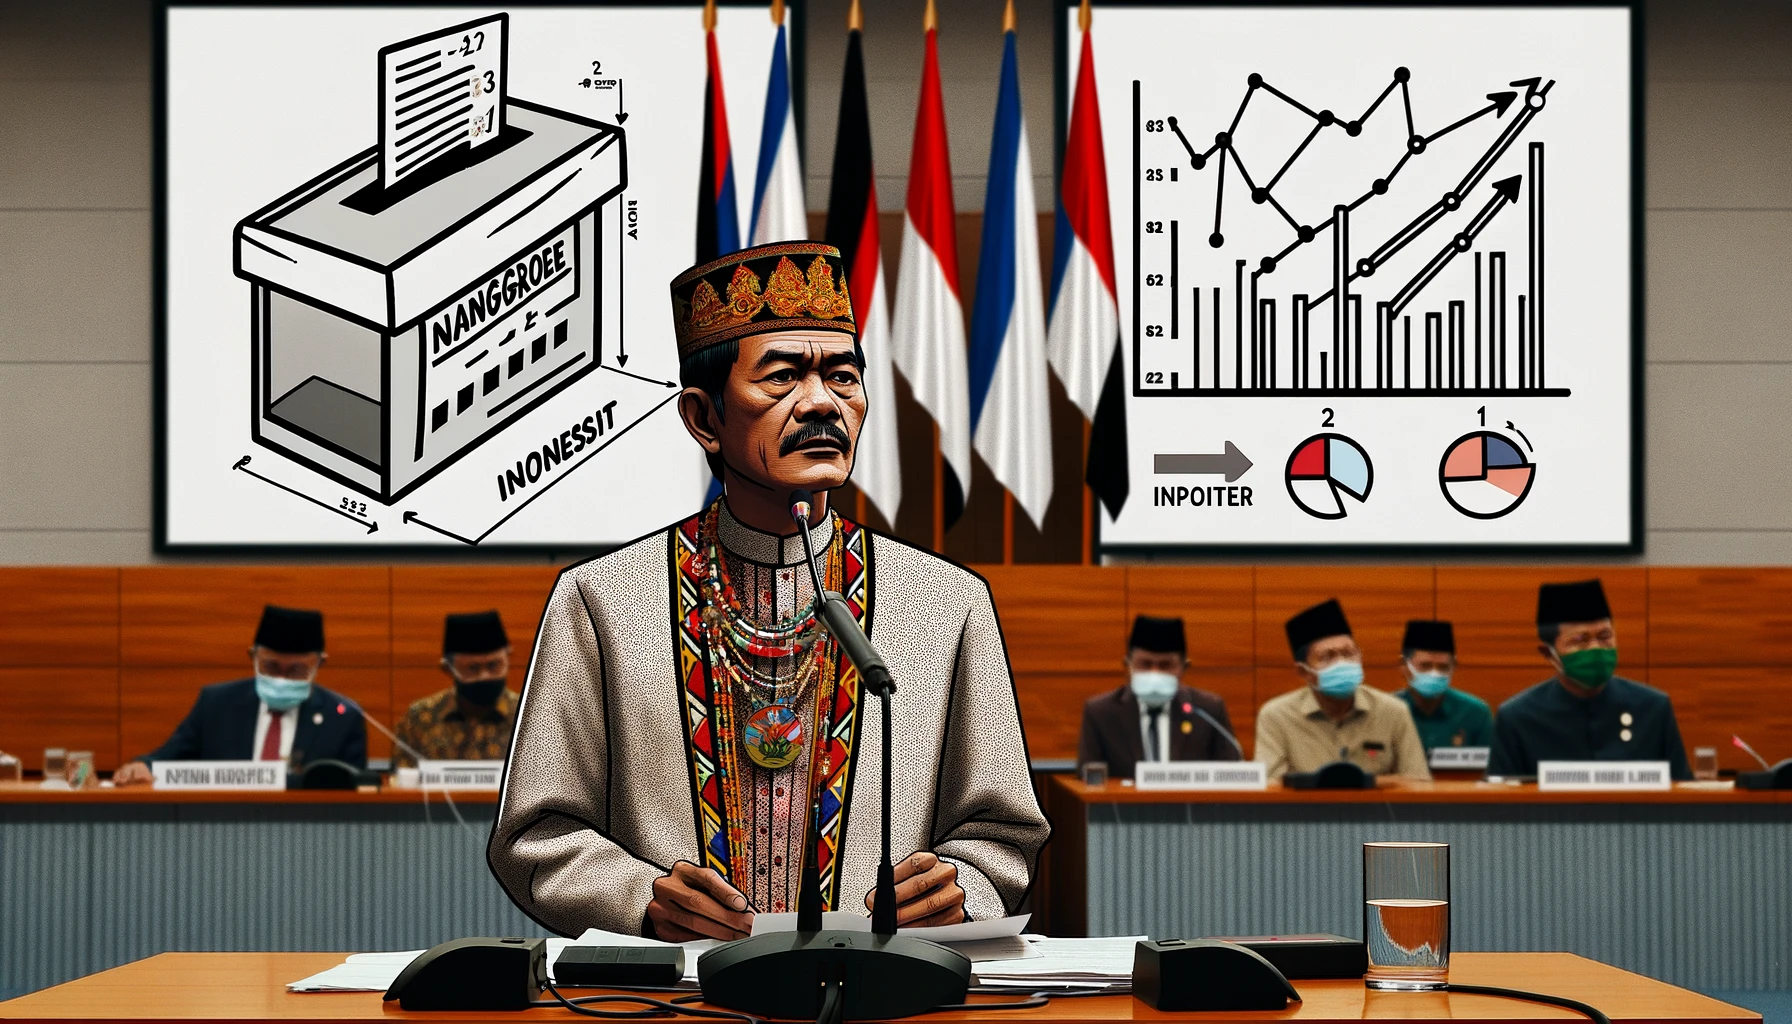 Saksi Partai Nanggroe Aceh menyebut adanya penggelembungan suara di tiga kecamatan untuk Partai Persatuan Pembangunan di Daerah Pemilihan Aceh Timur 4.